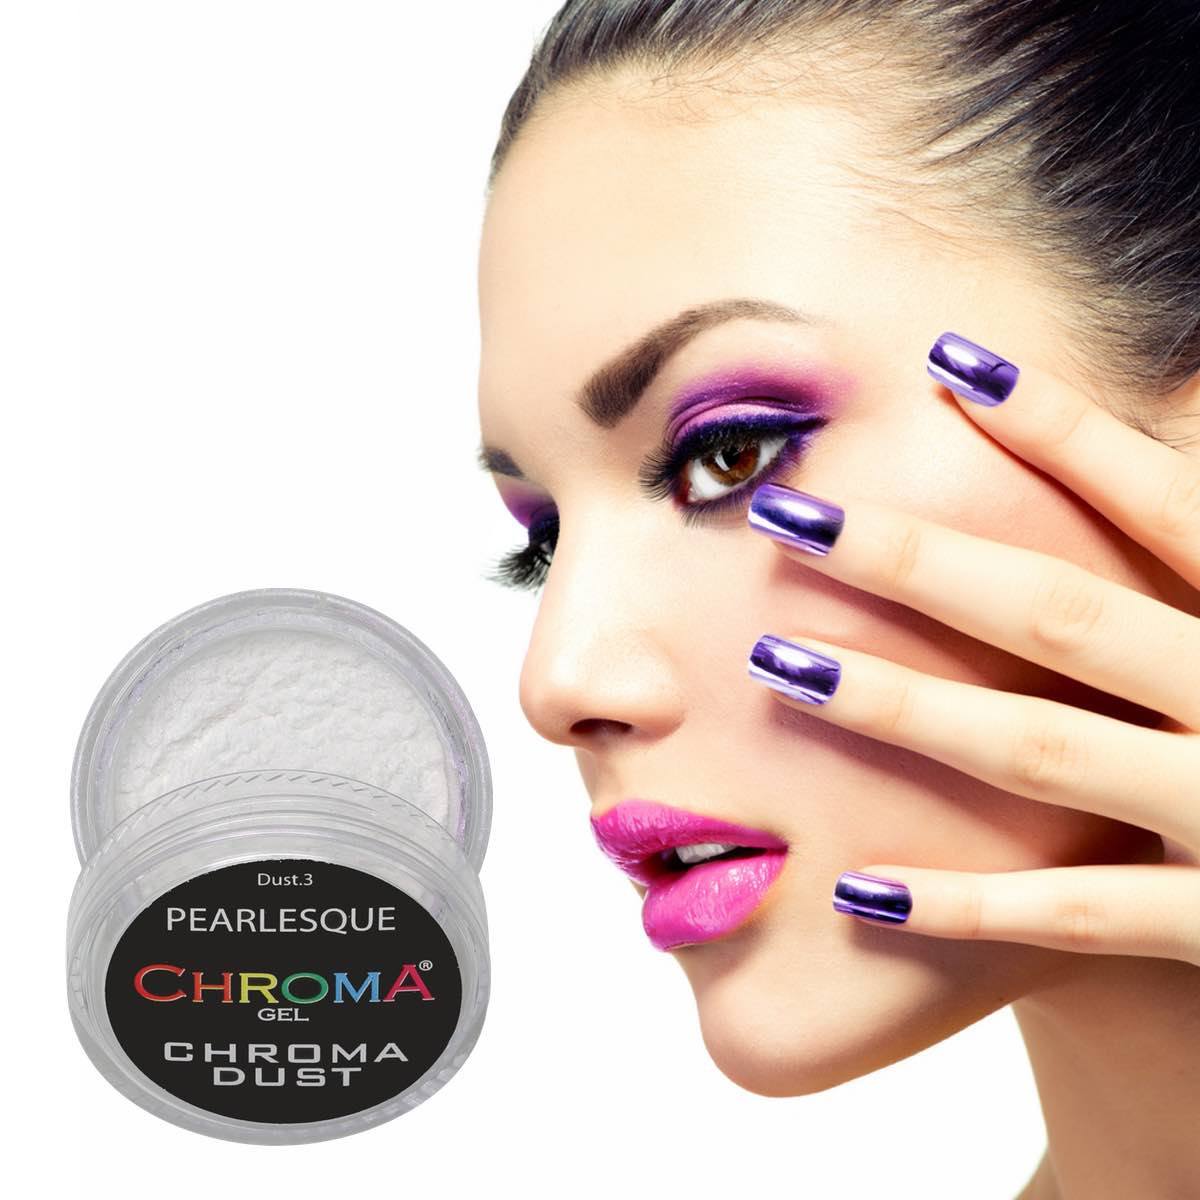 Chroma Dust No.3 Pearlesque Chrome Powder - Mirror Nails 2g - Beauty Hair Products Ltd